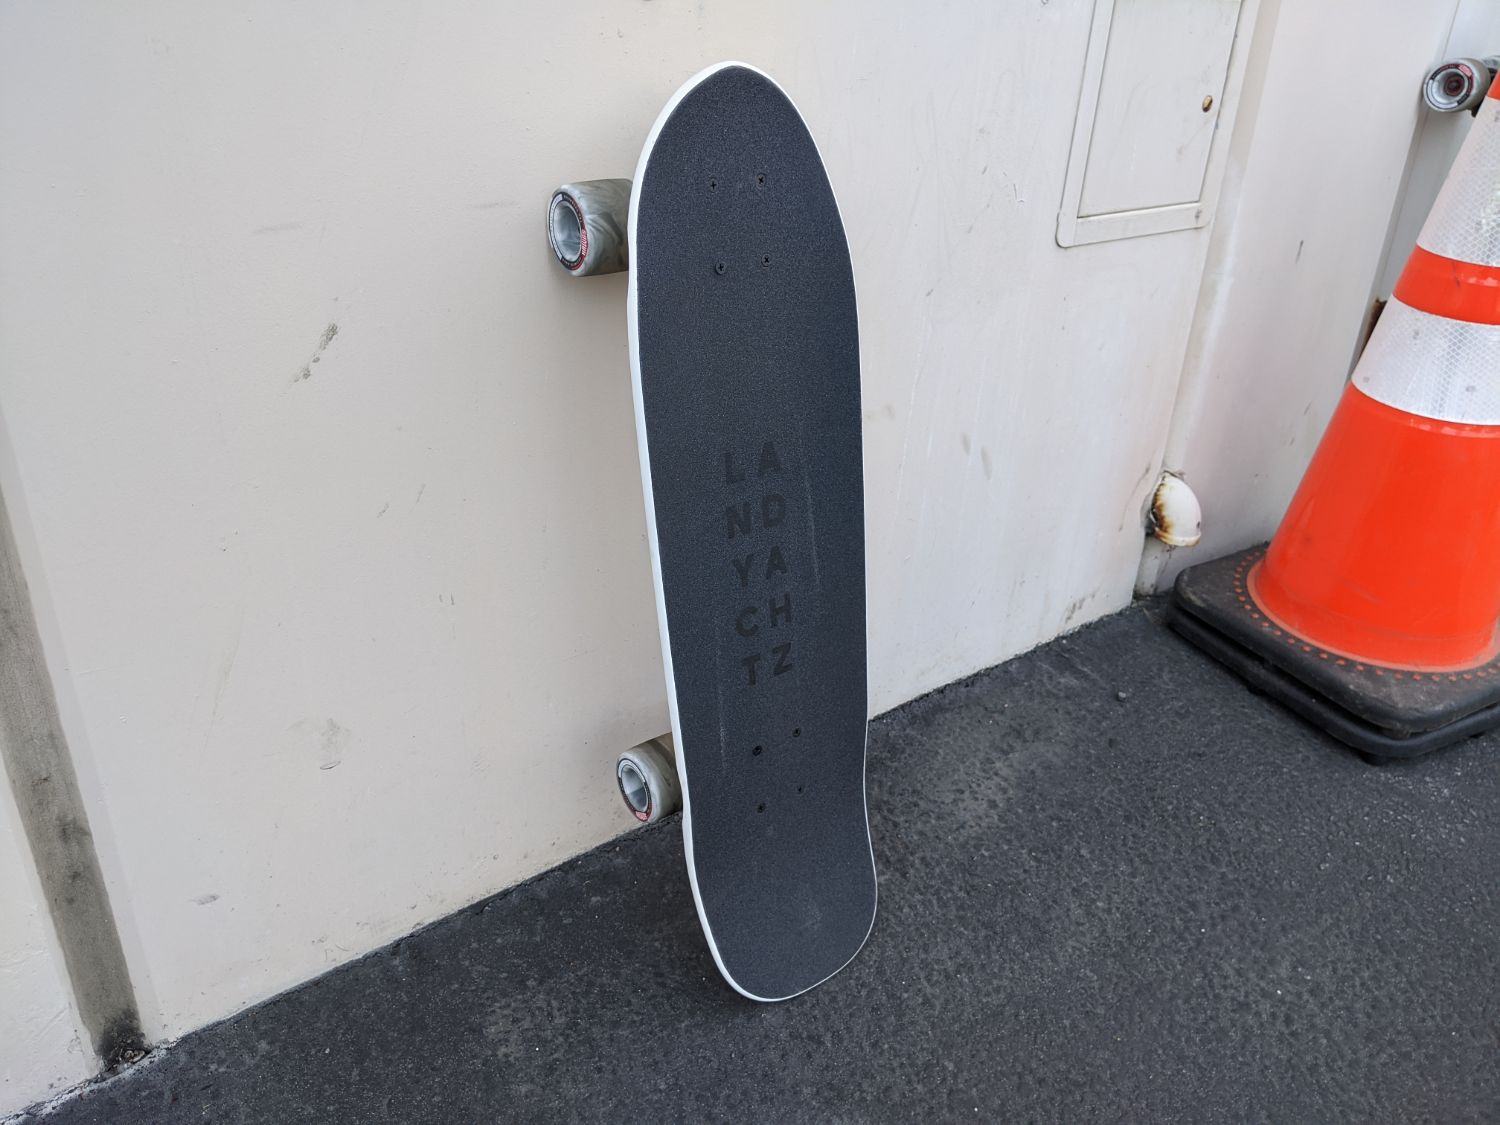 Landyachtz Dinghy Series Skateboard, Arctic Fox Complete - Outlet / Used 2